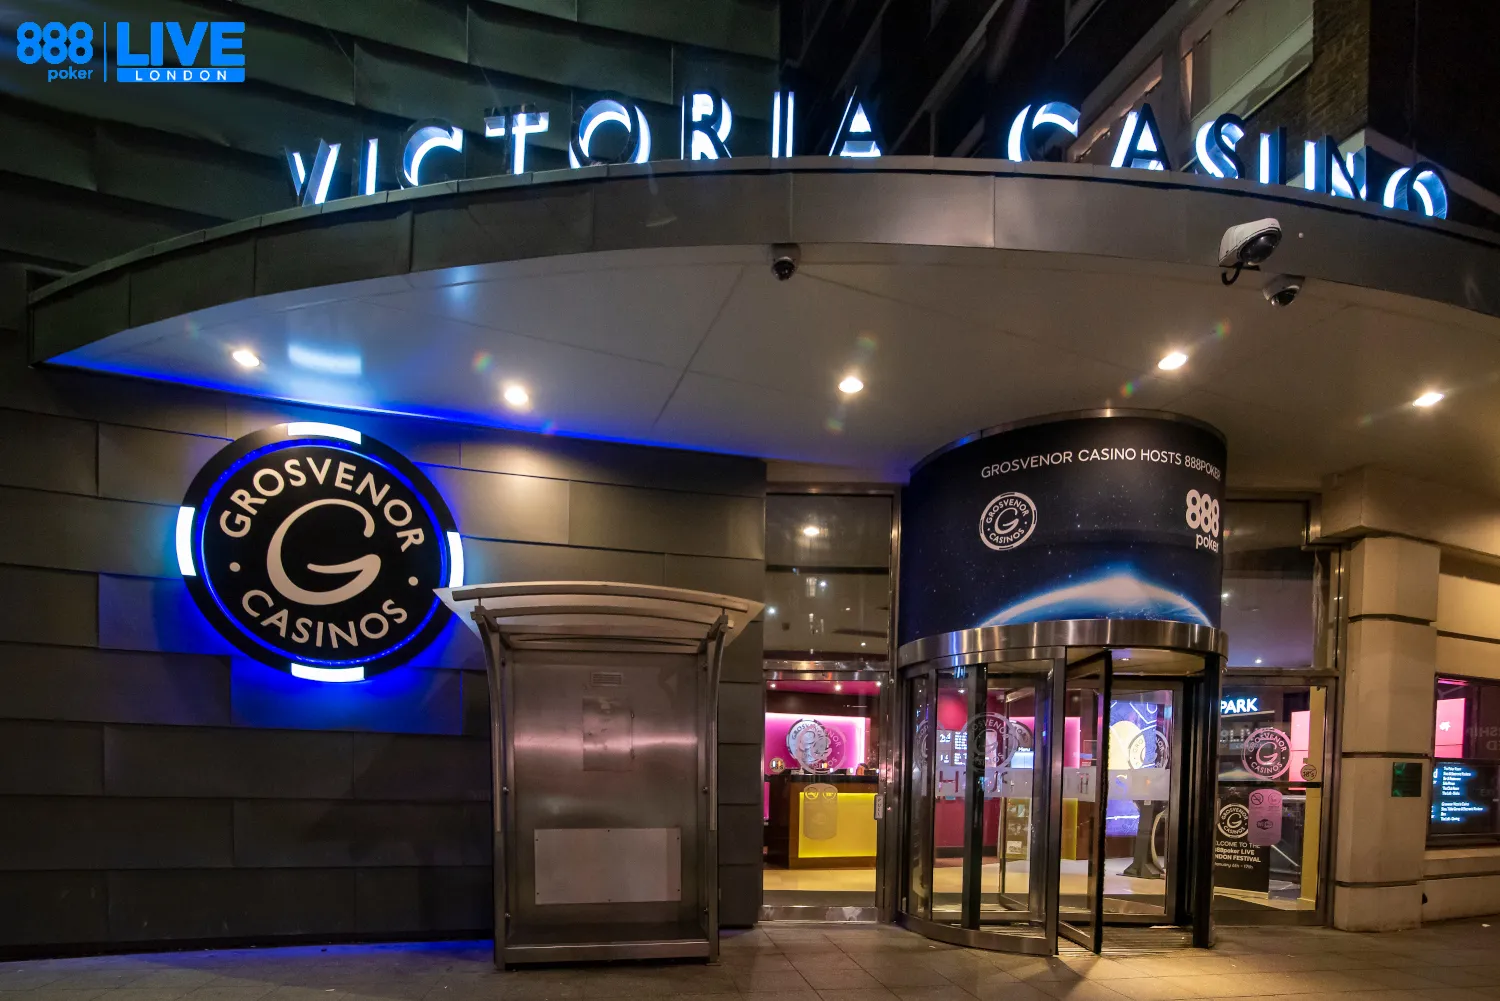 Victoria Kasino poker london 888poker